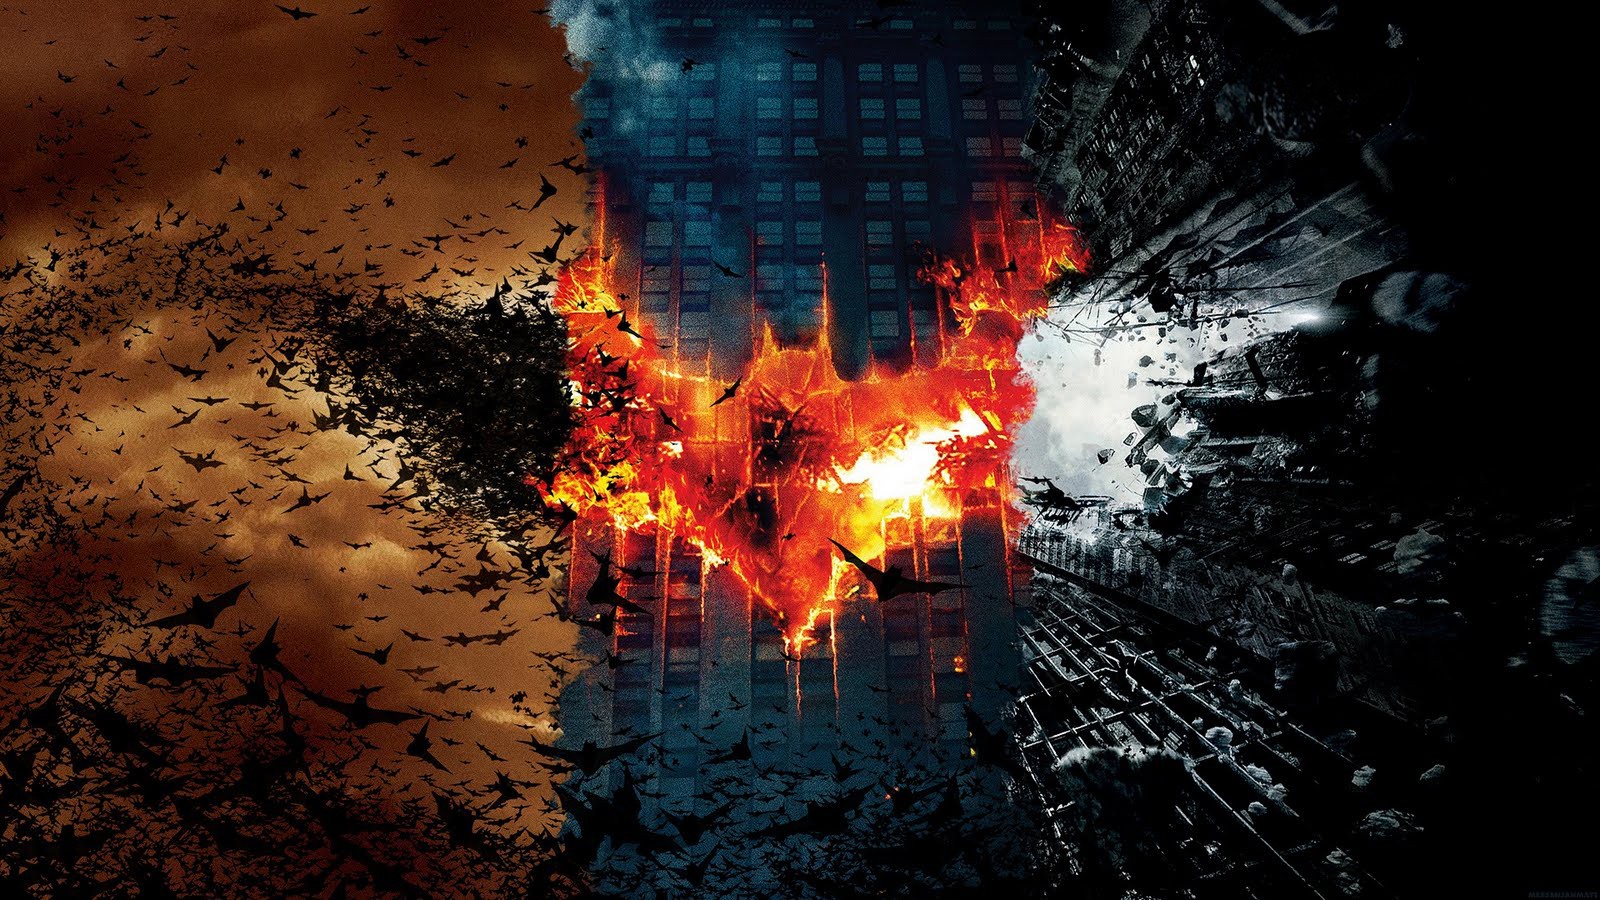 Batman Begins | POPCORNOGRAPHY